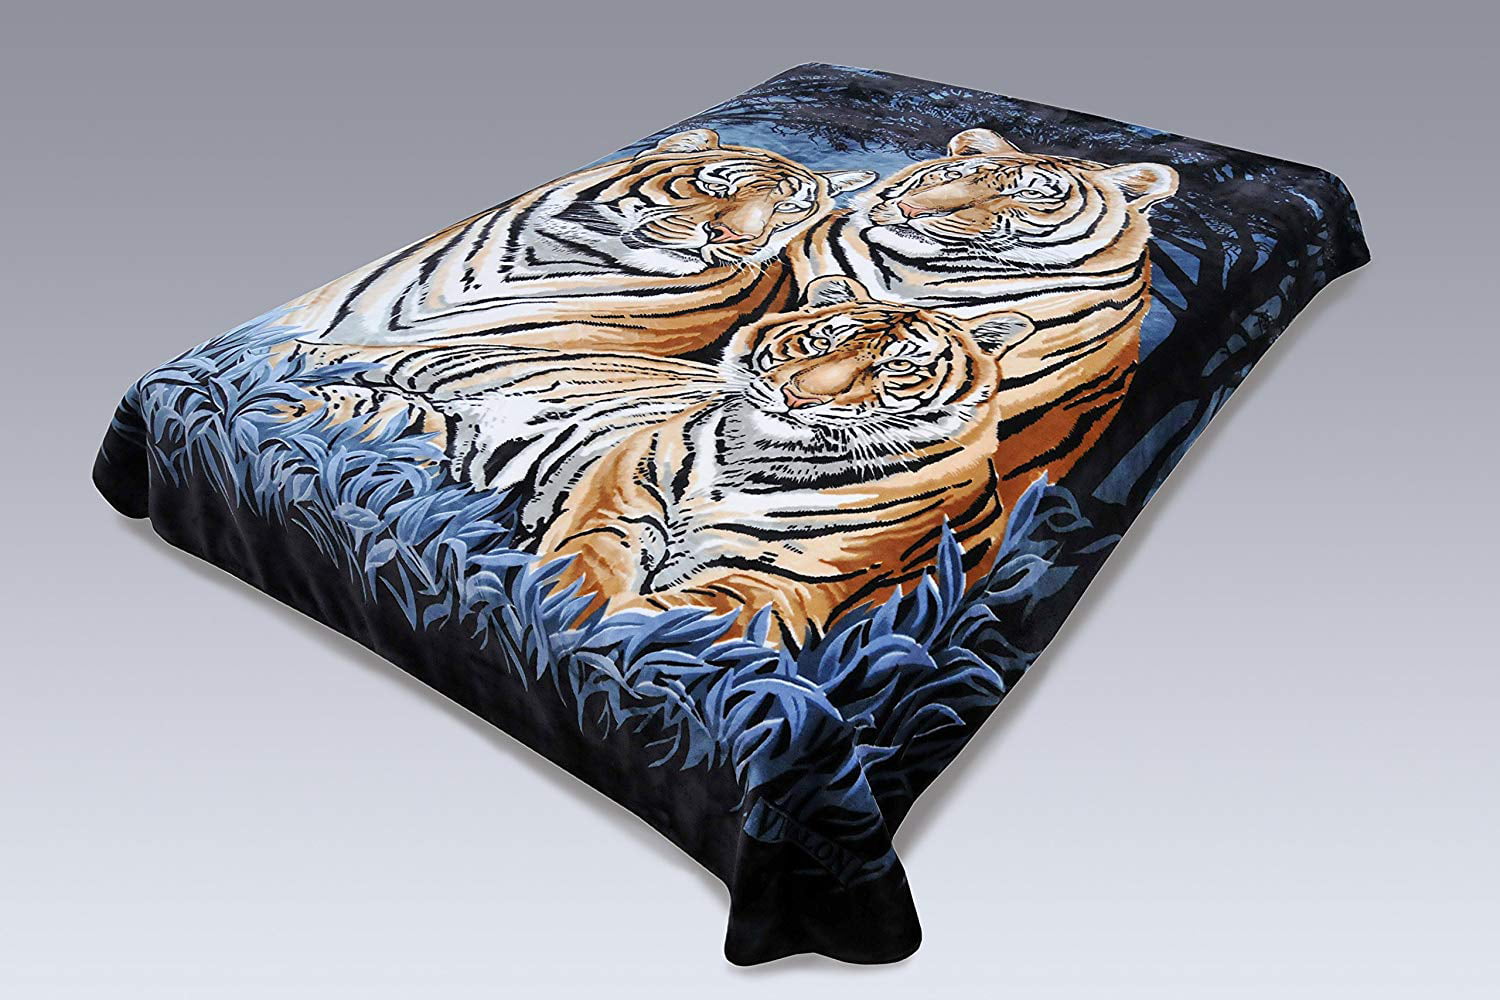 King, 3 Tigers Blue Solaron Korean Super Thick Heavy Weight Mink Blanket 